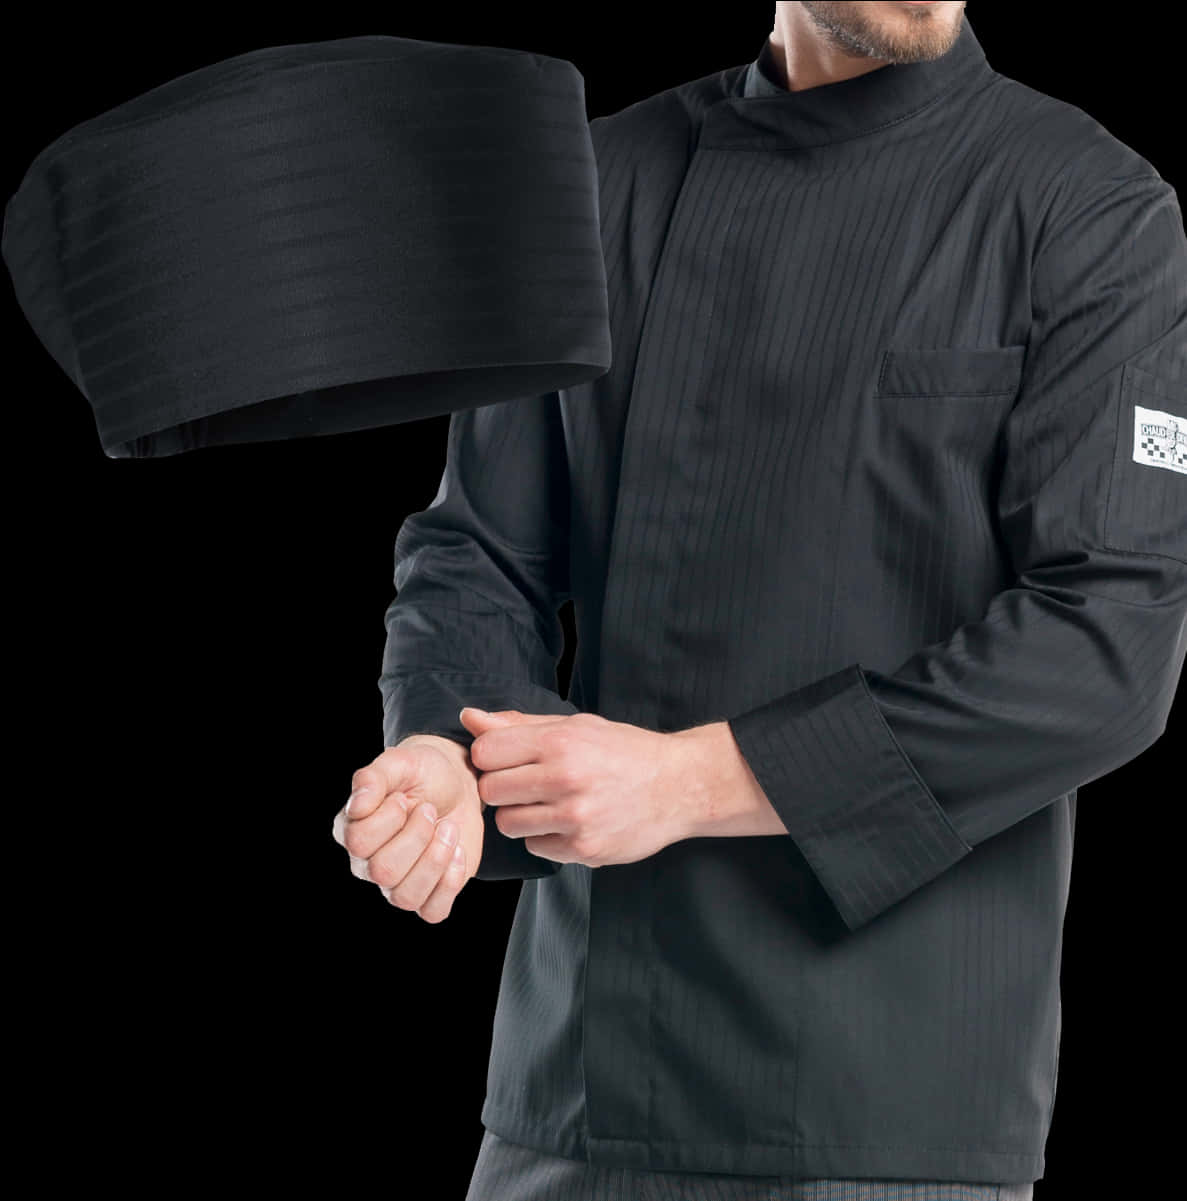 Man In Black Jacket Plus Chef Hat